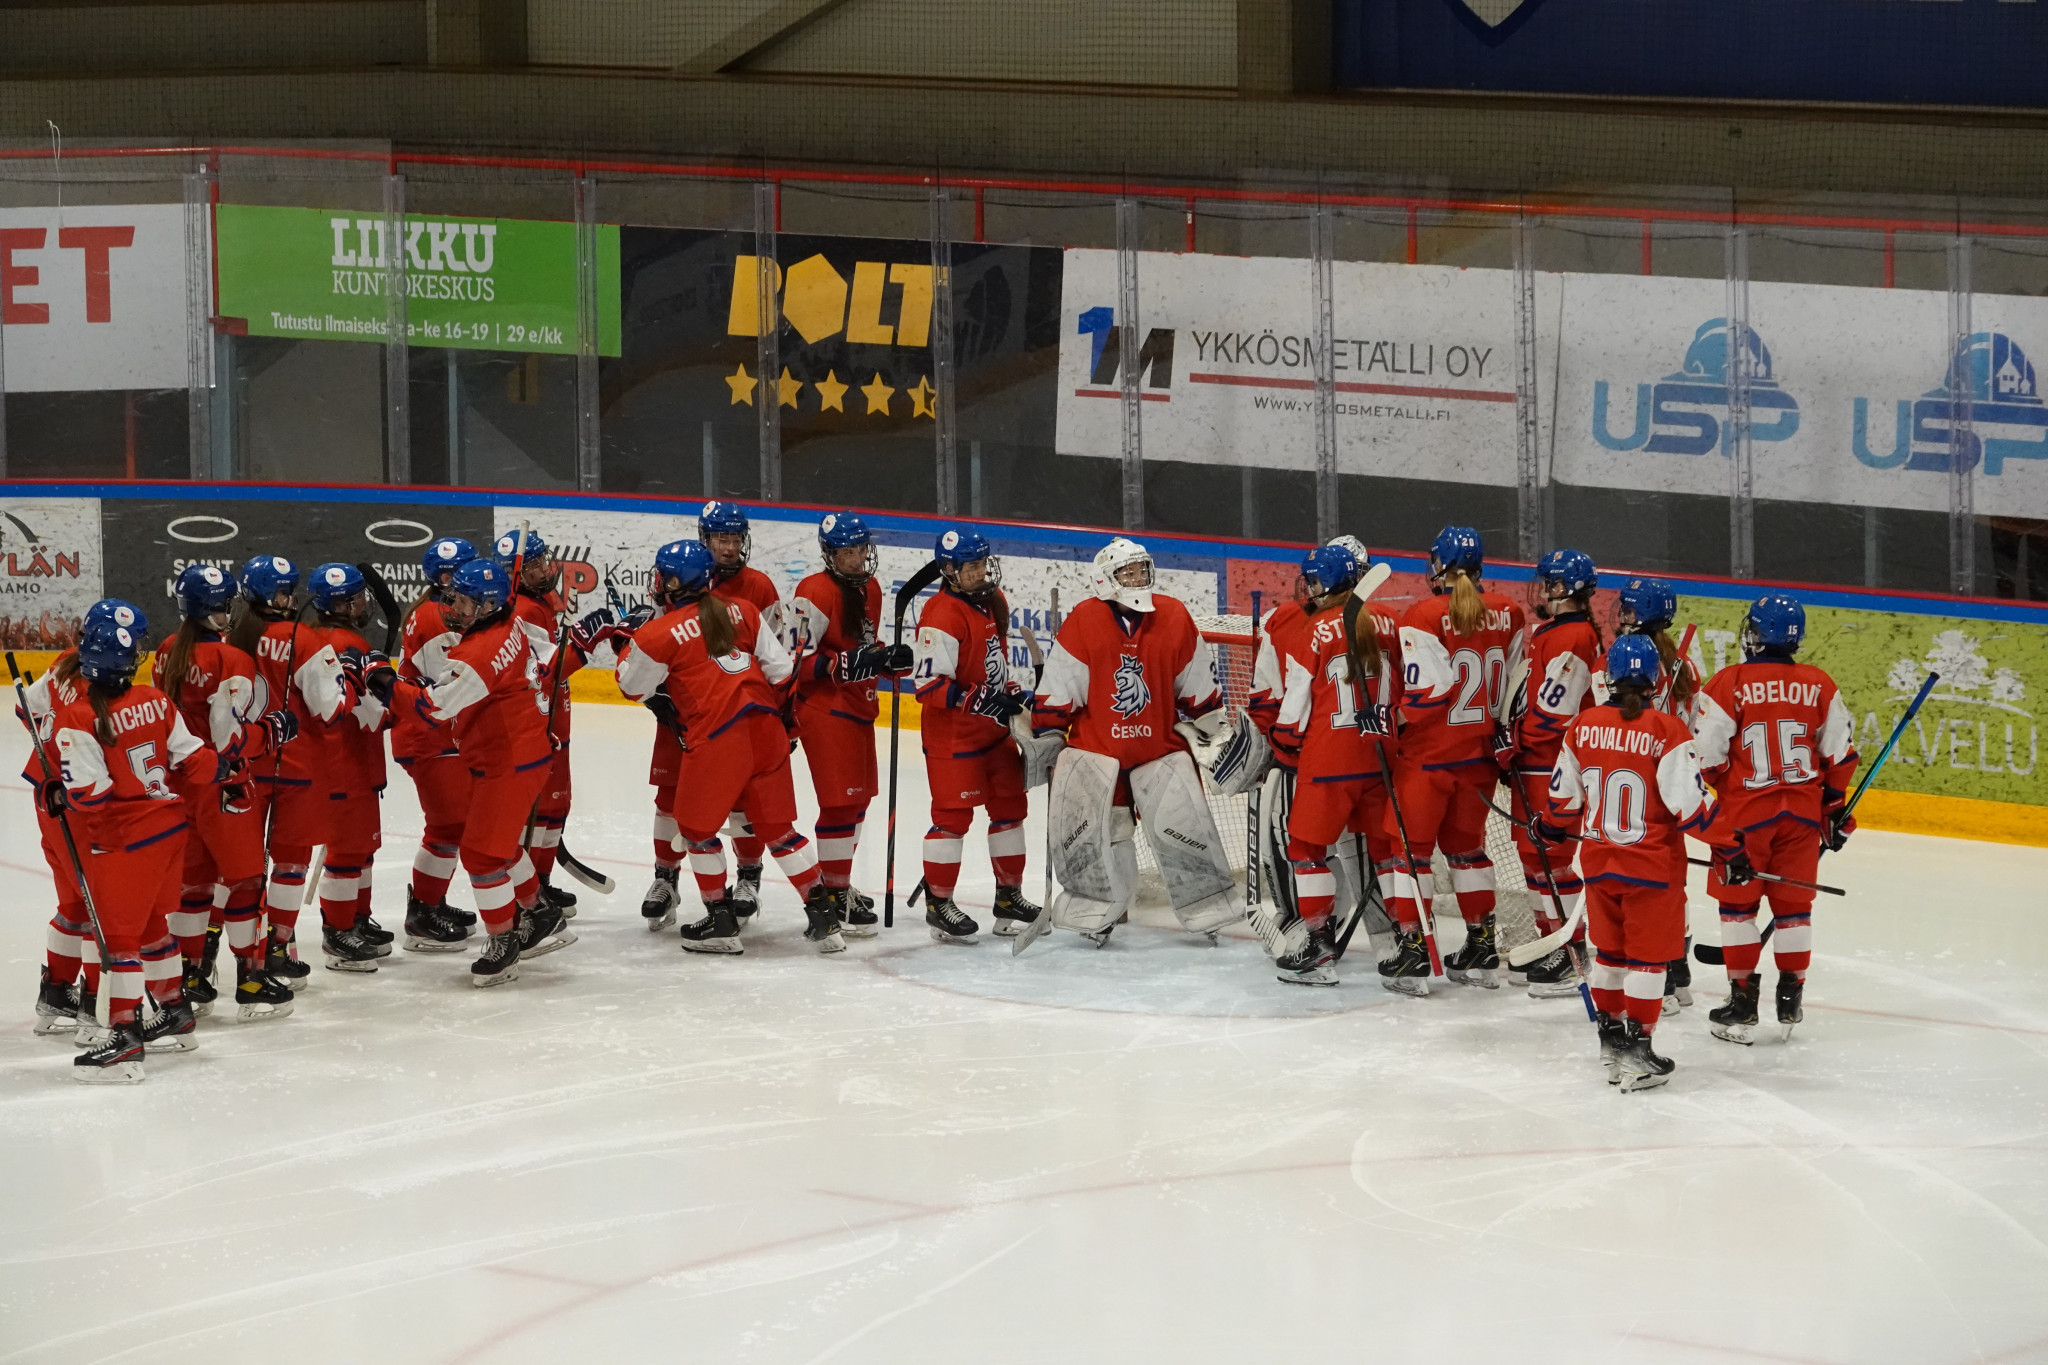 Czech Republic win shootout to take girls' ice hockey gold at Winter EYOF